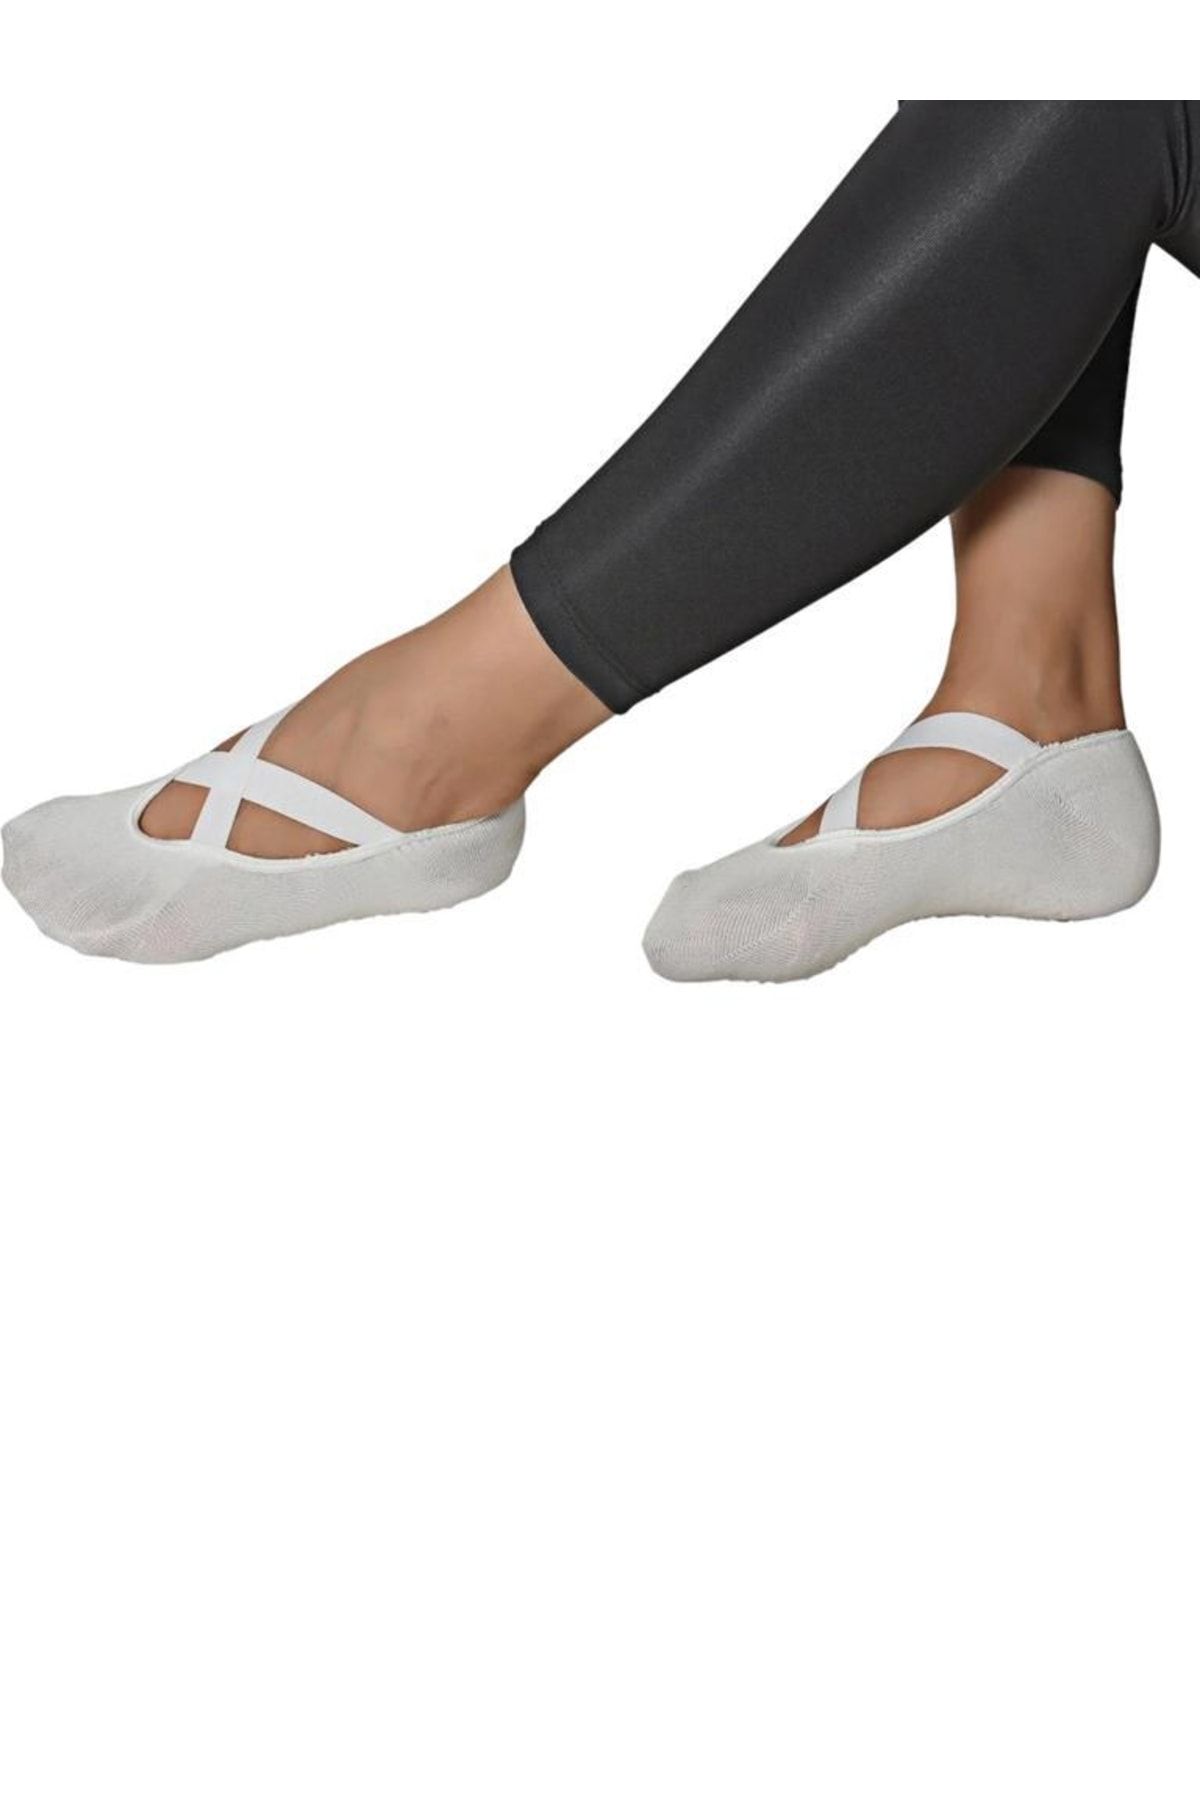 REMEGE Yoga Socks - Yoga Belt Set of Two / Non-Slip Pilates Socks Dance  Yoga Socks + Yoga Belt - Trendyol